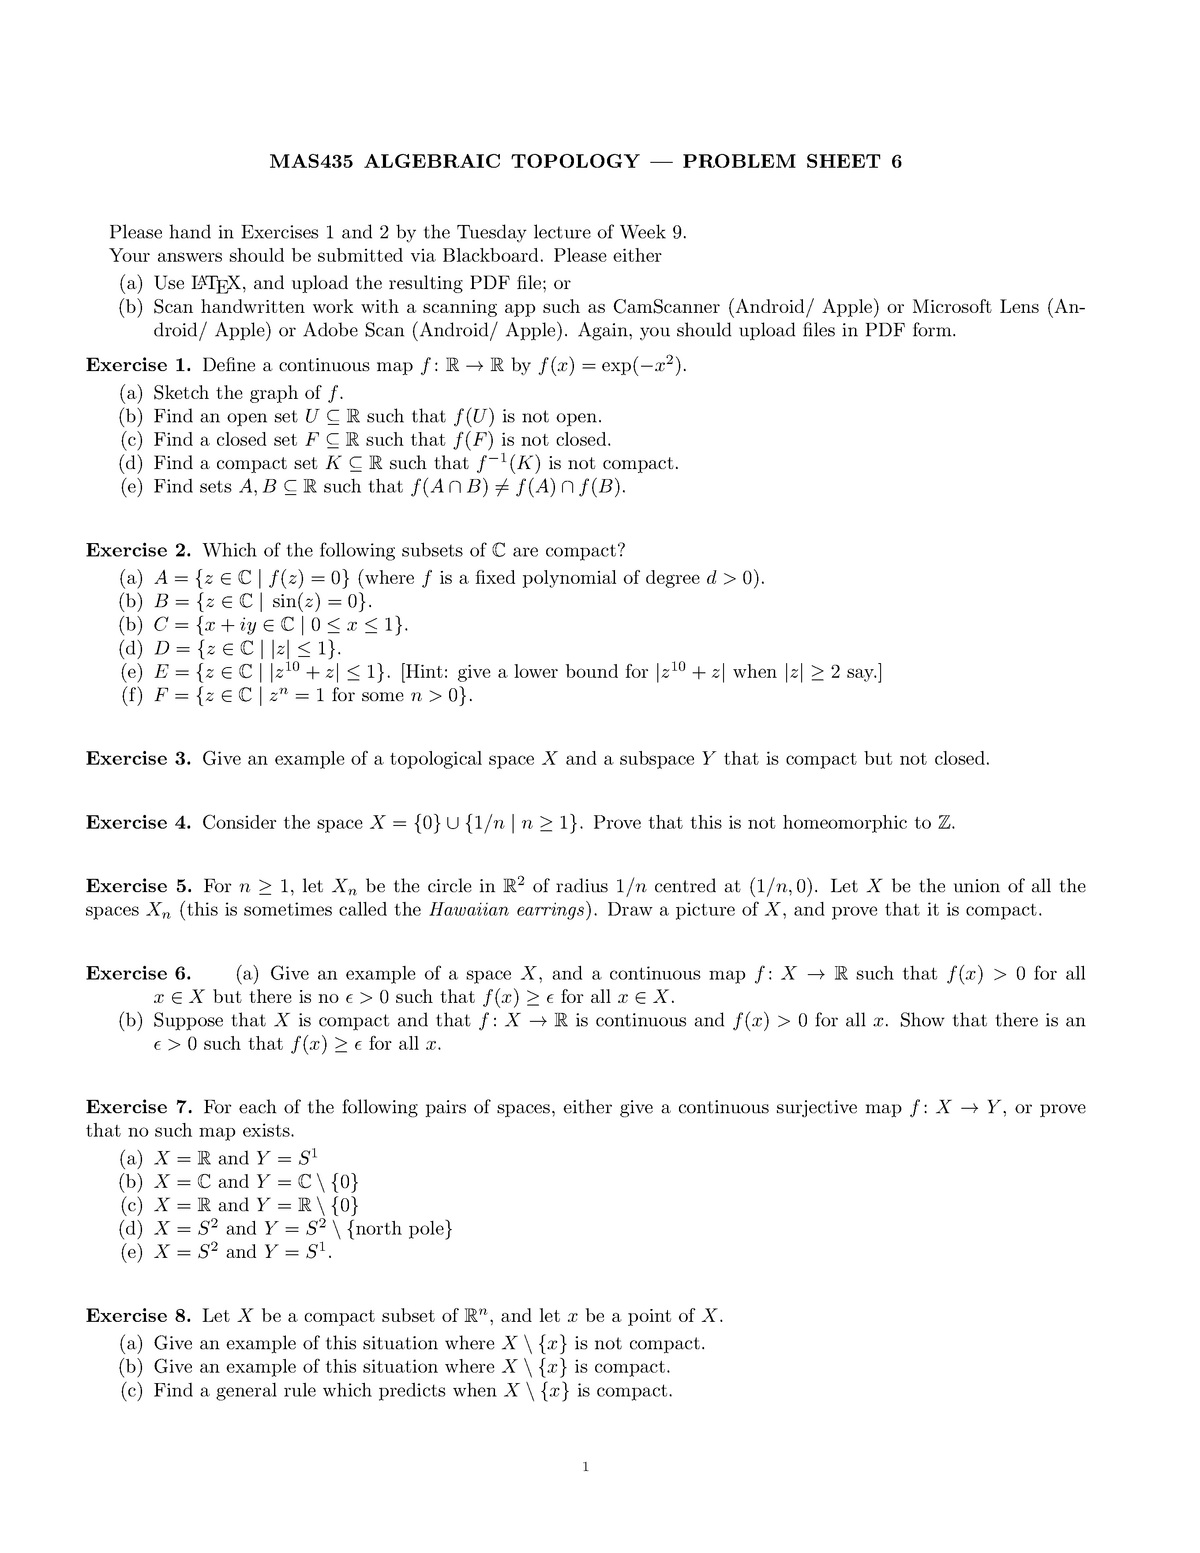 mas435-algebraic-topology-problem-sheet-6-mas435-algebraic-topology